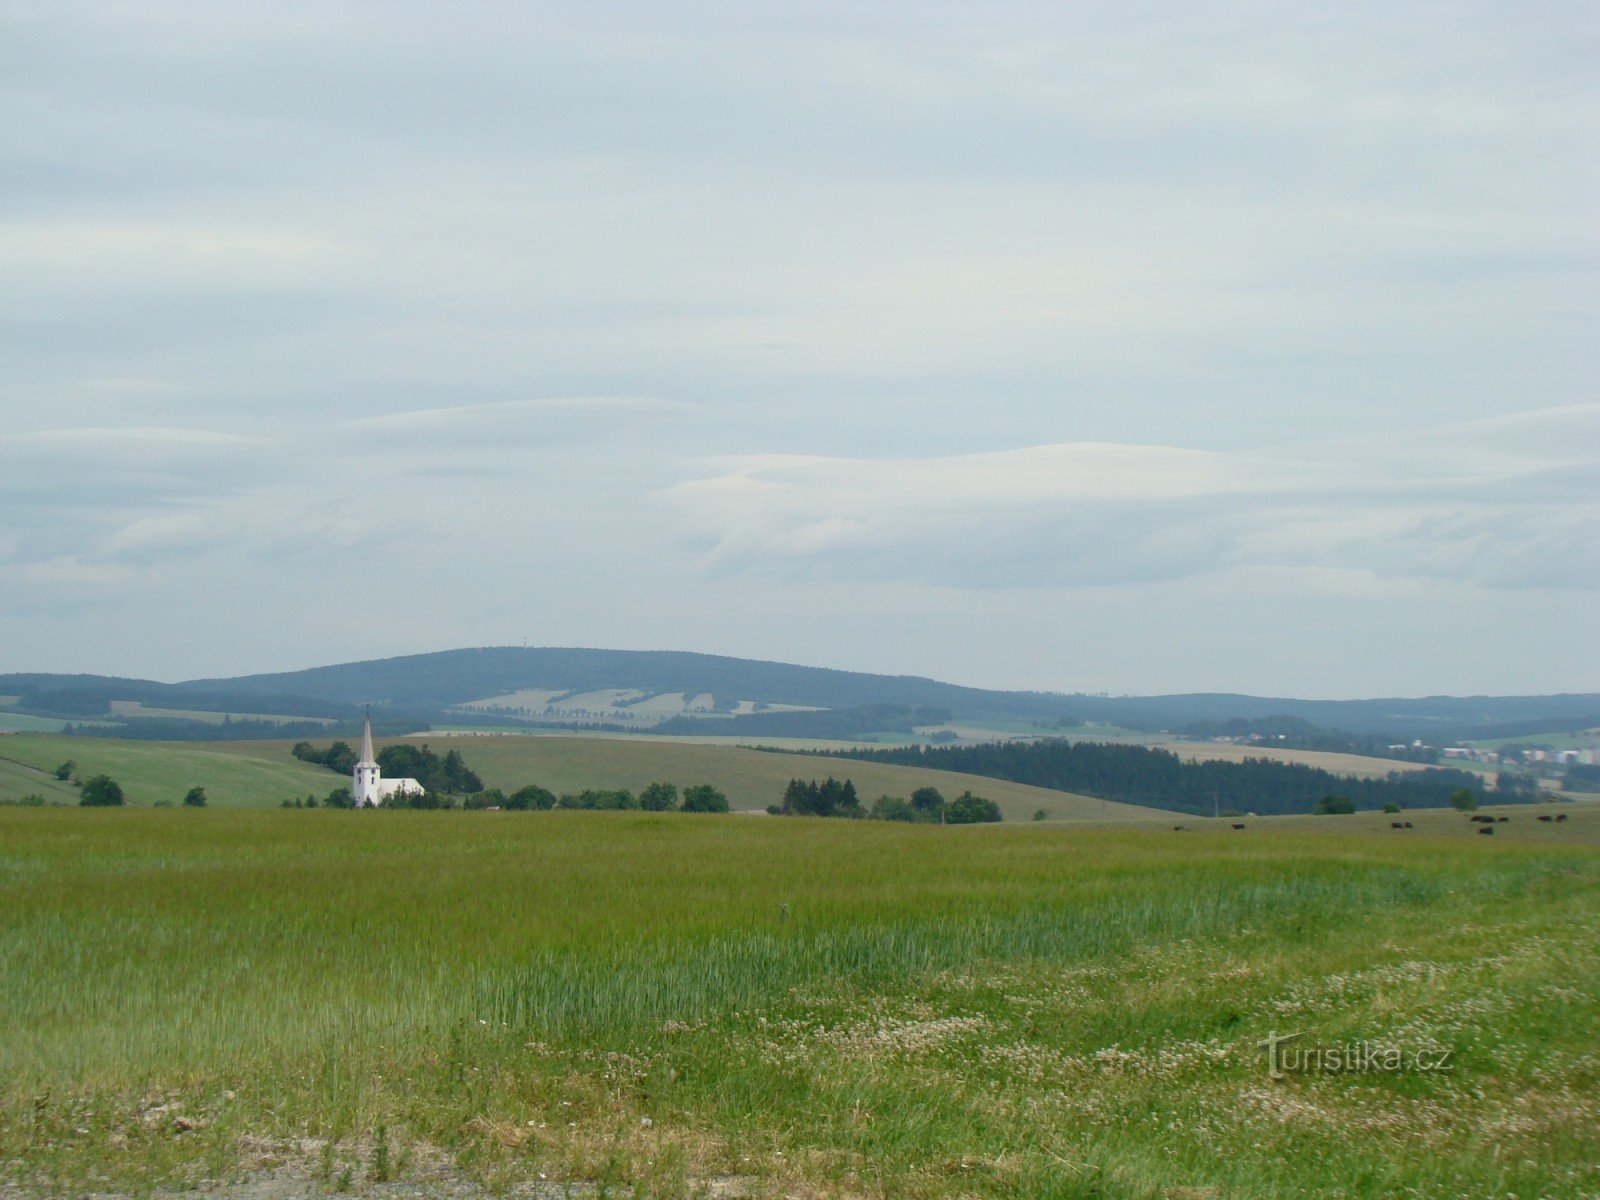 Vista do topo de Hraničné Petrovice, Moravský Beroun à direita